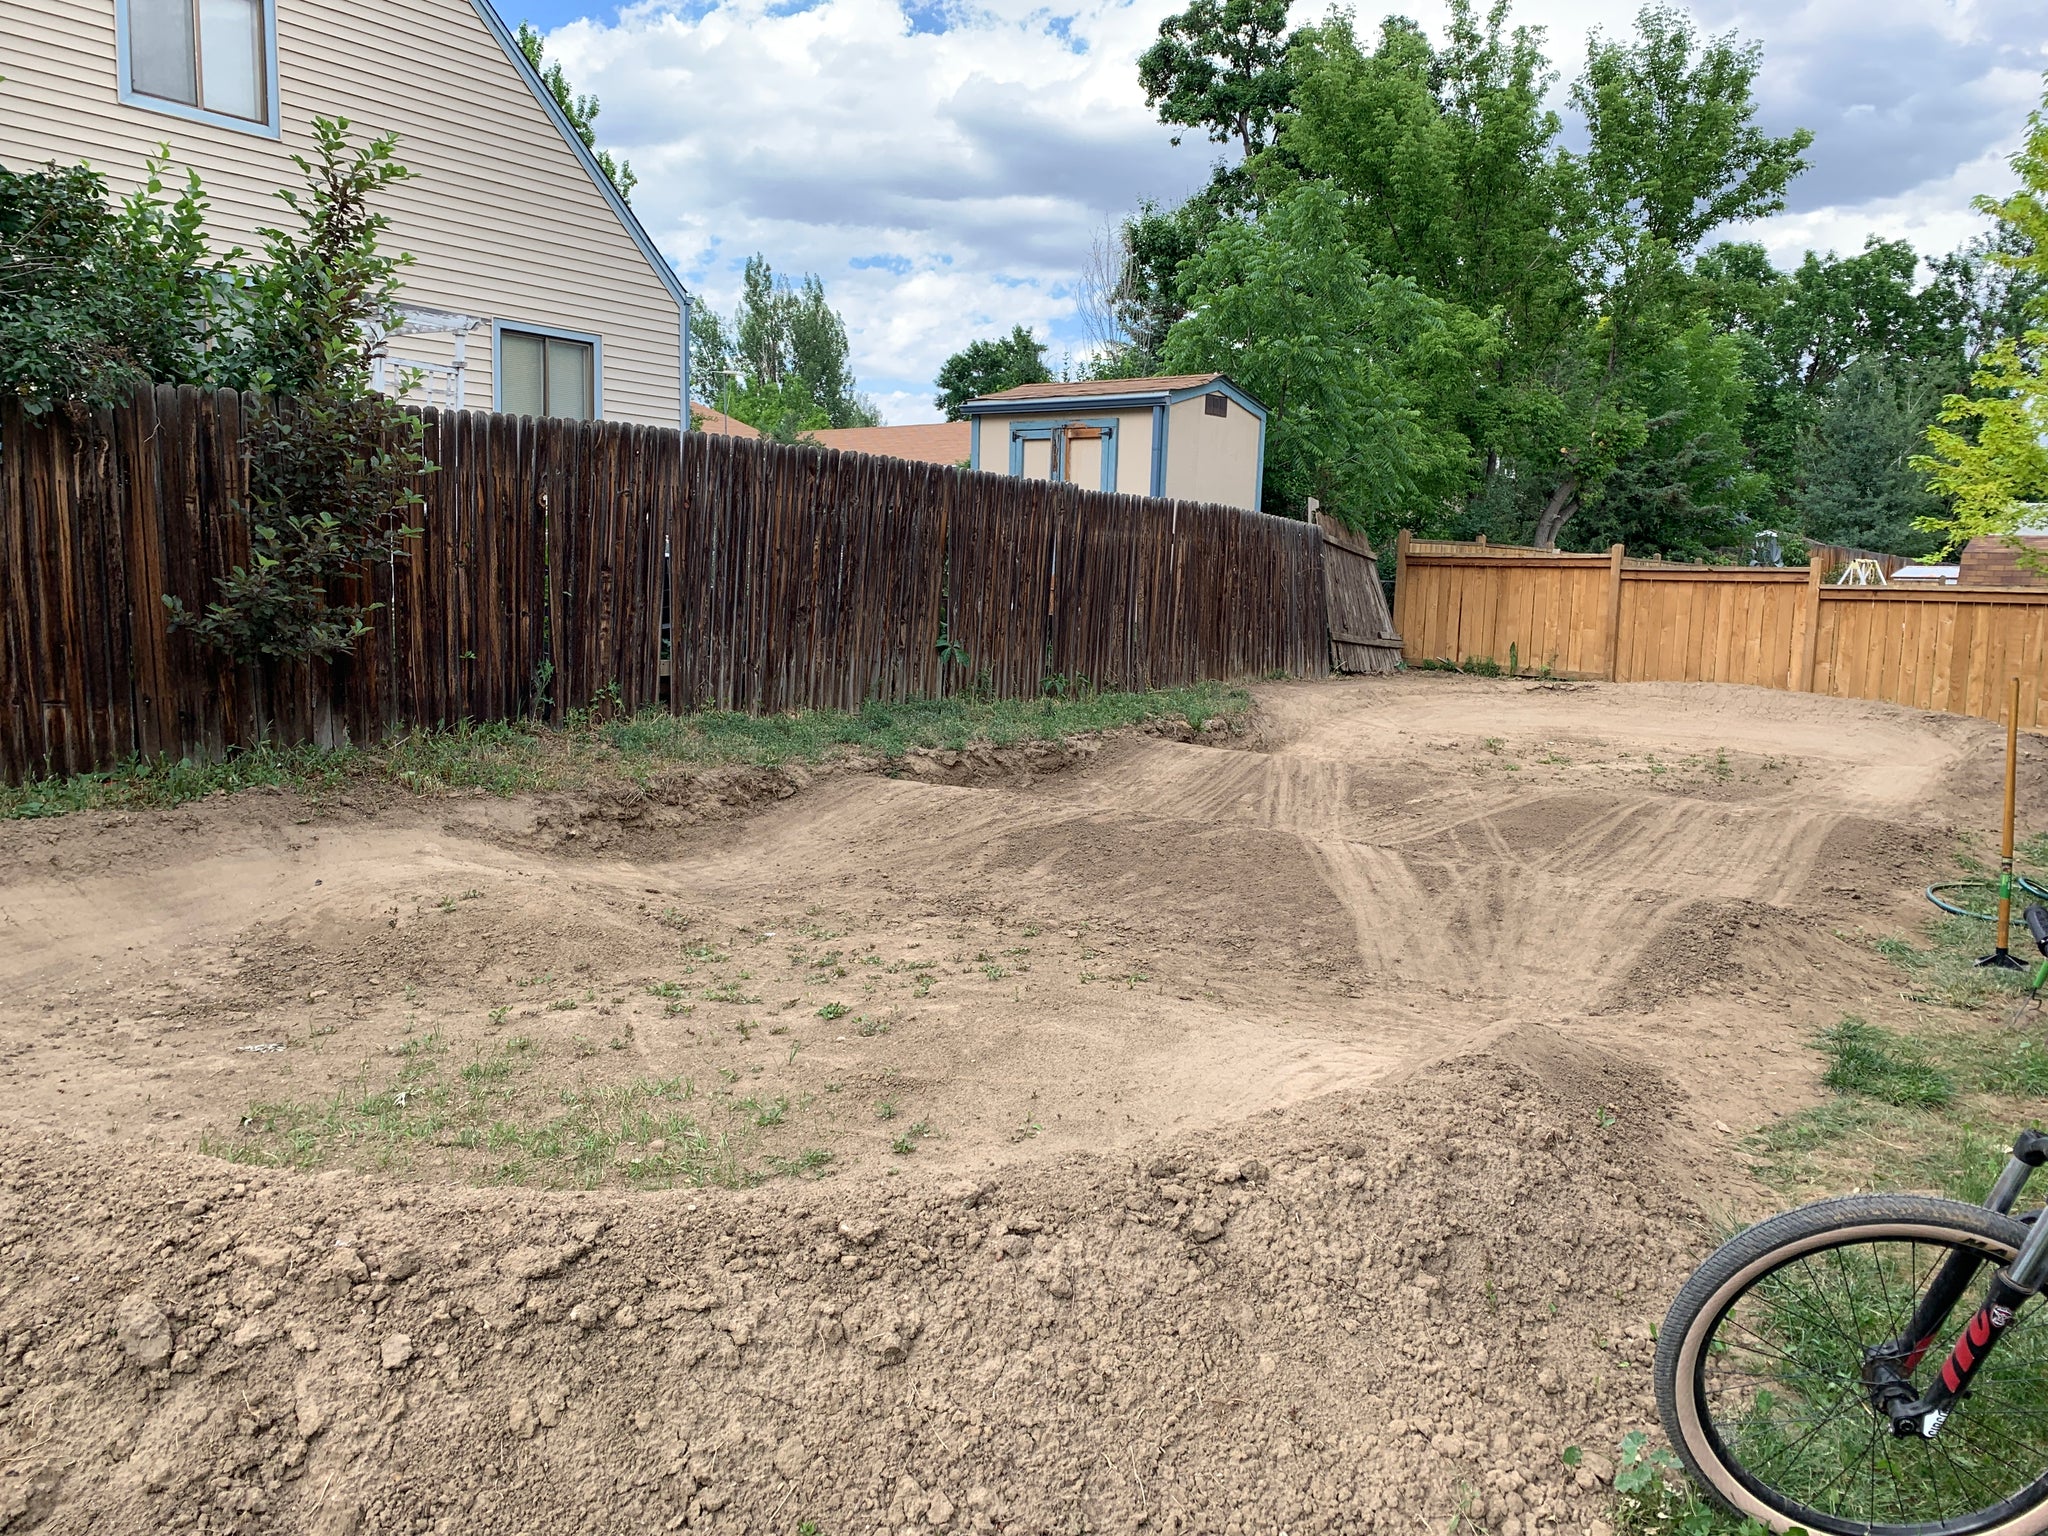 Build a backyard small oval pump track 